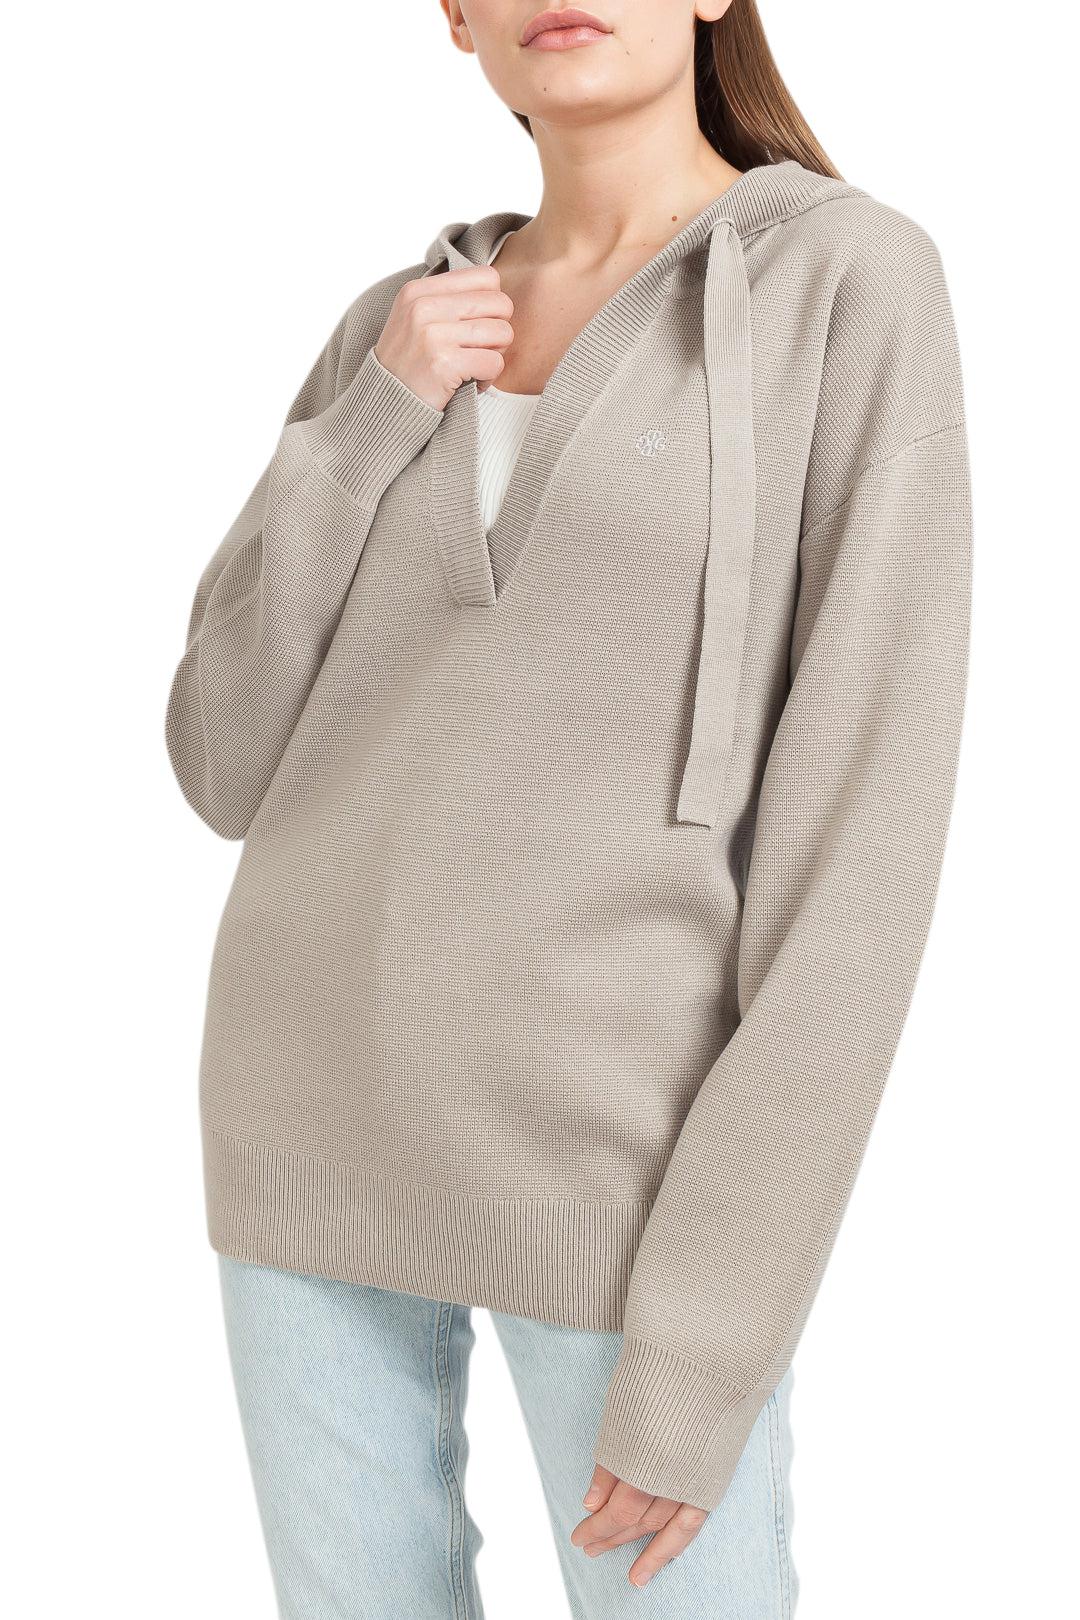 The Garment-Merino wool hooded sweater-18021-dgallerystore